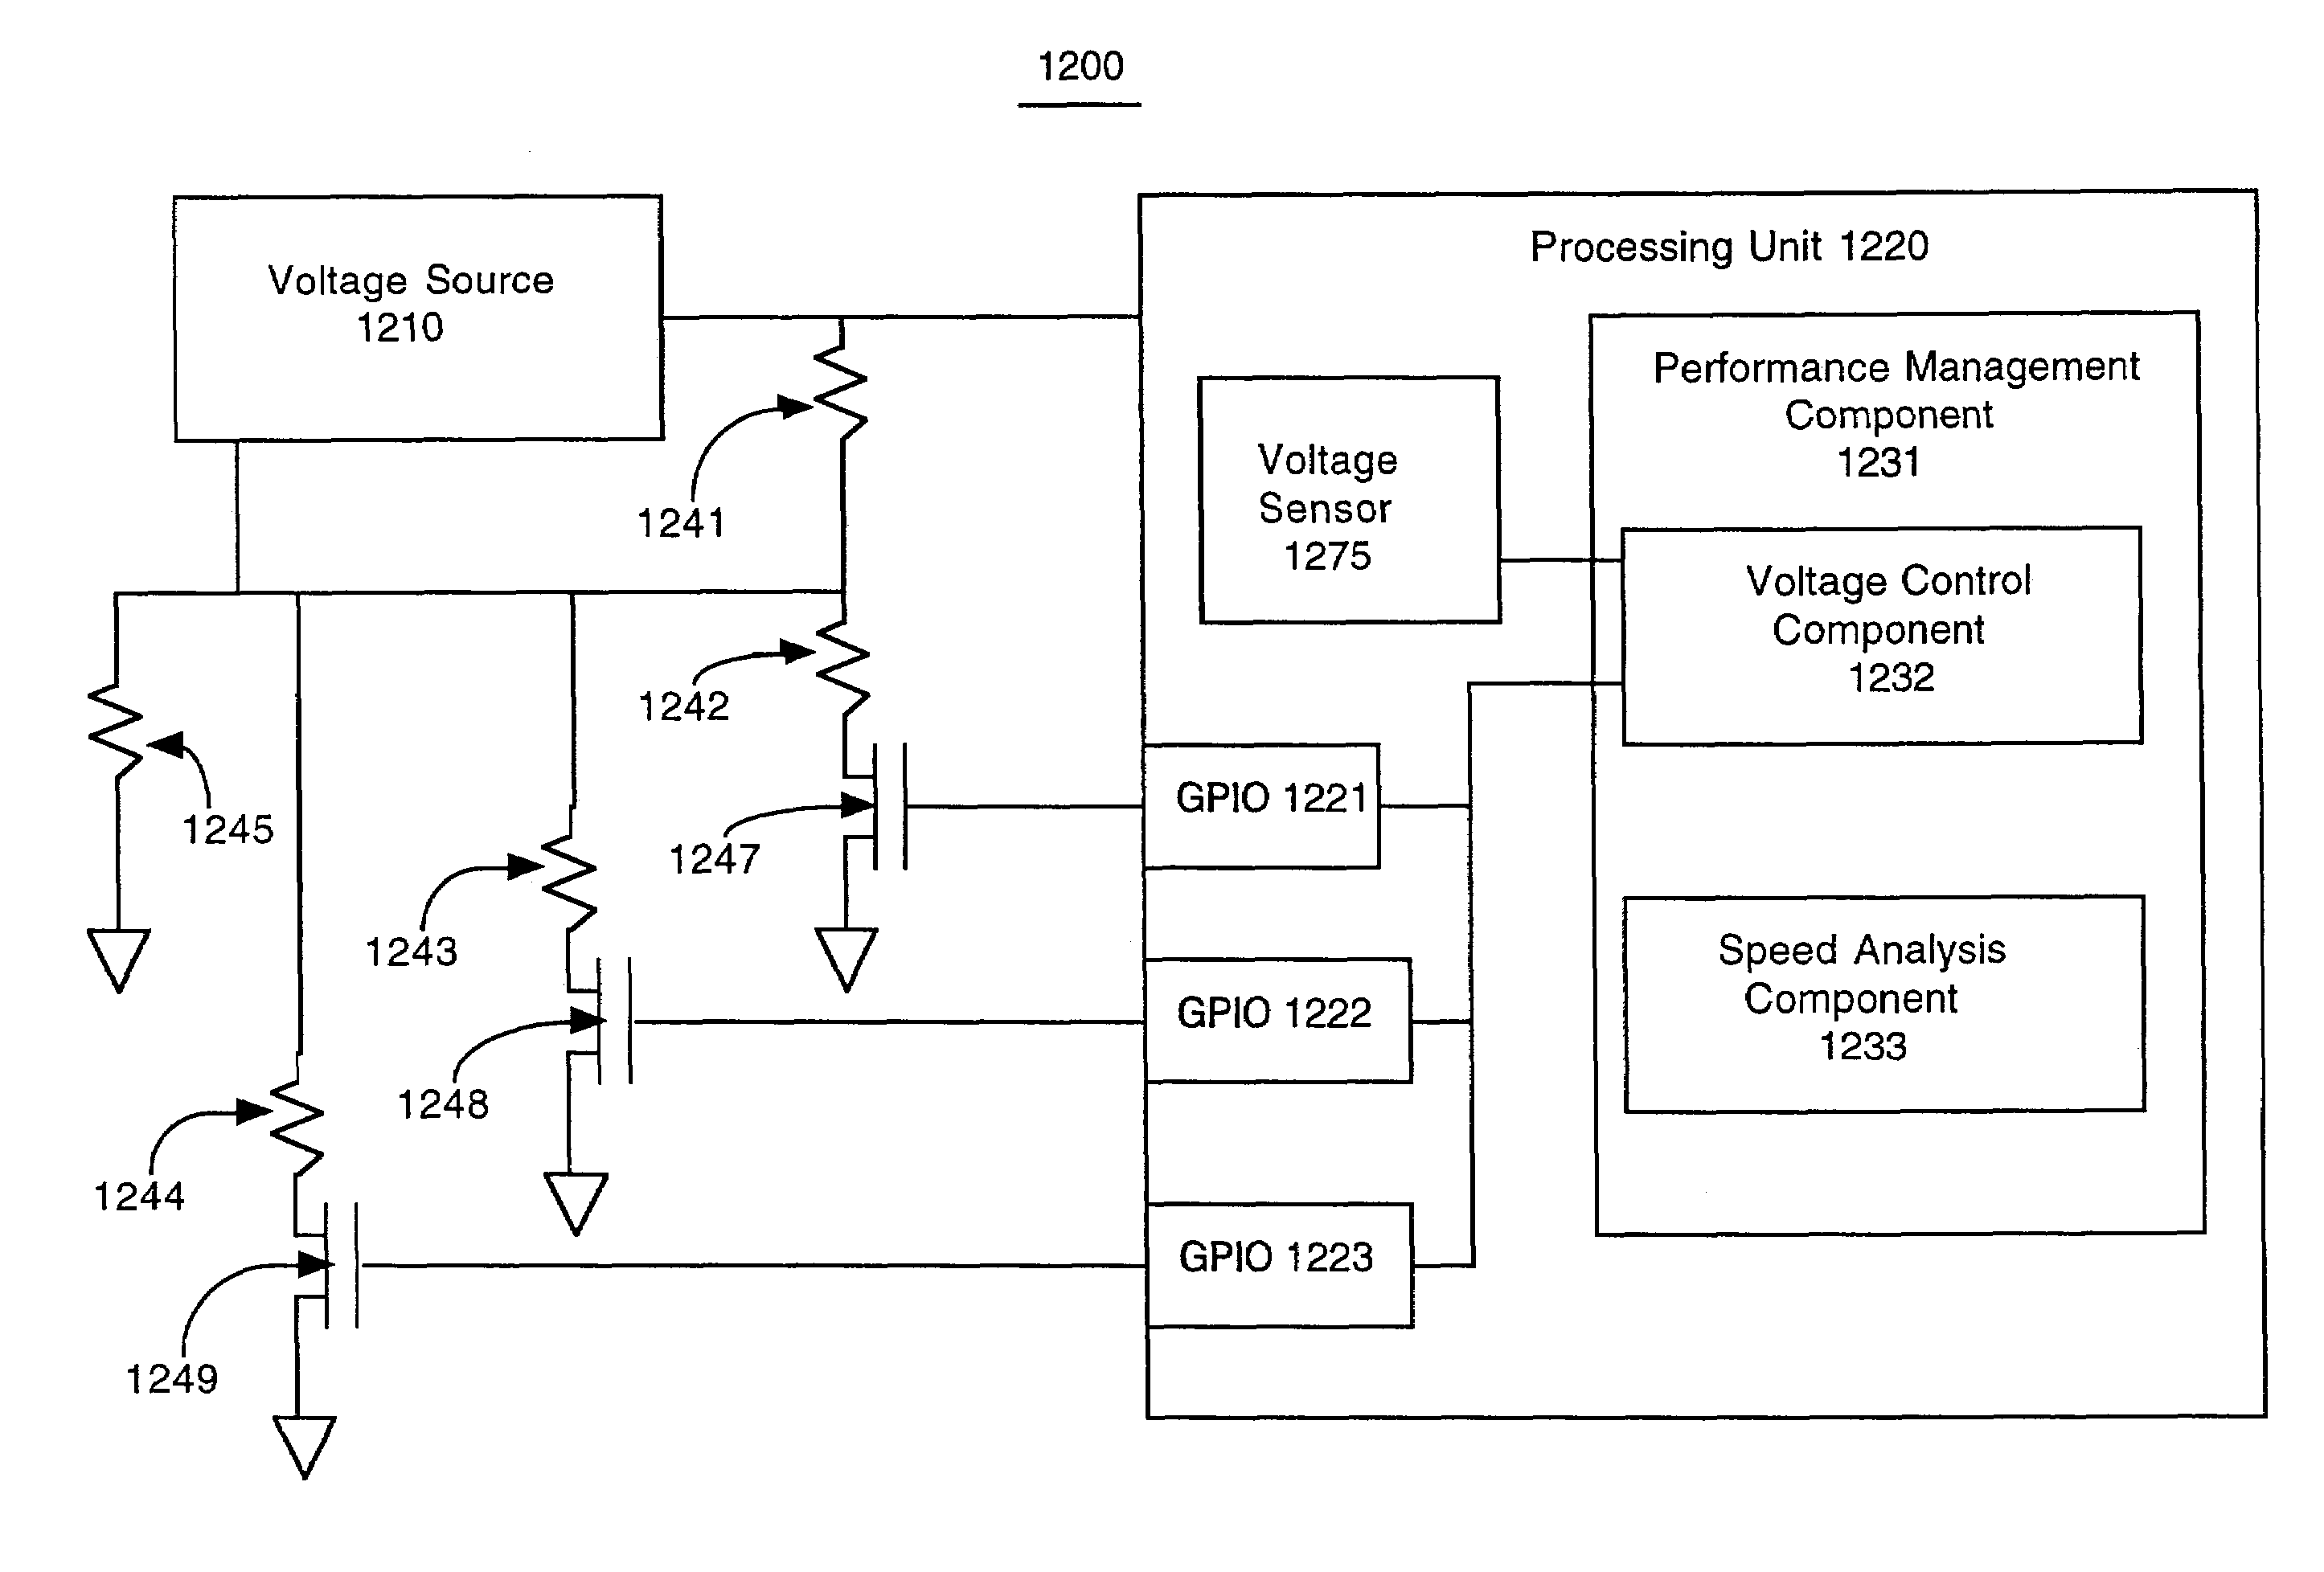 Processor voltage adjustment system and method